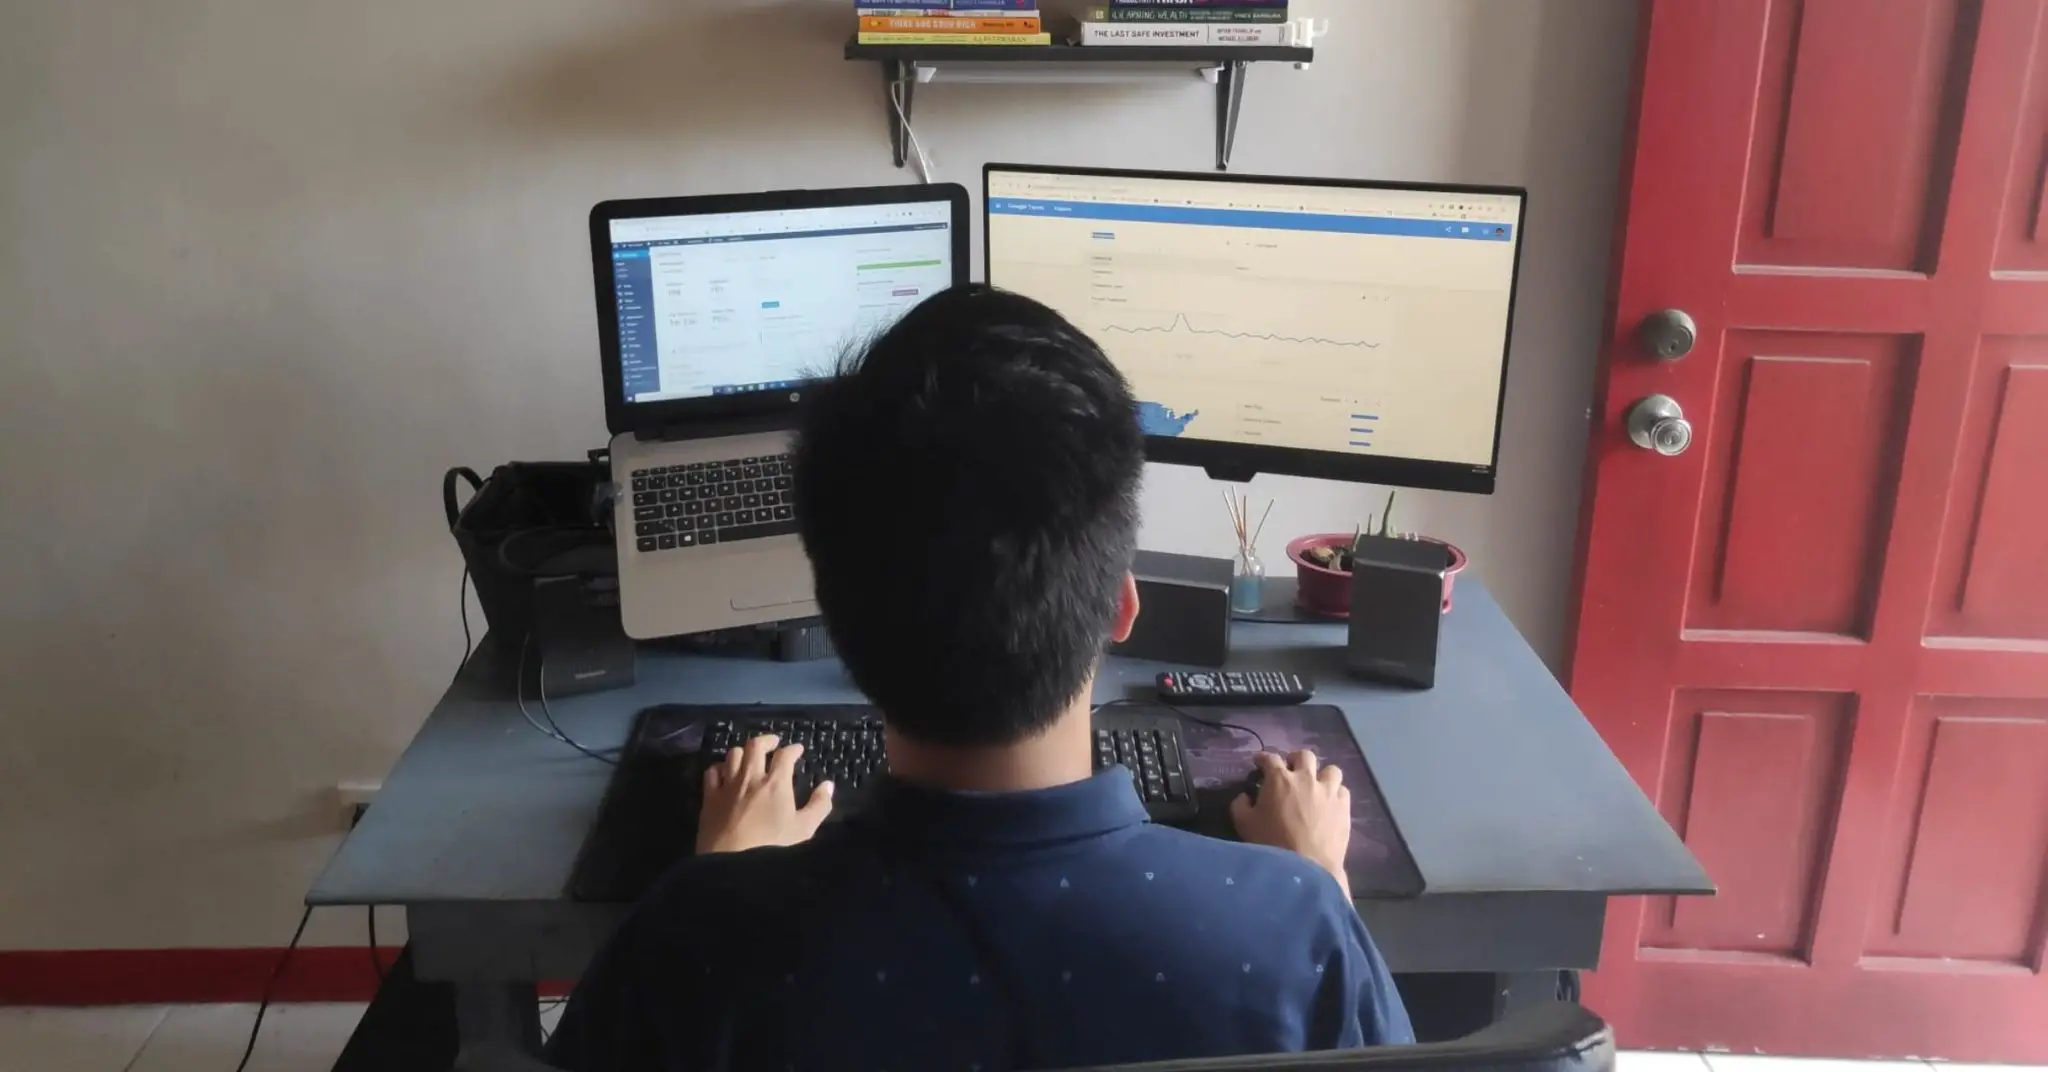 online typing jobs dubai